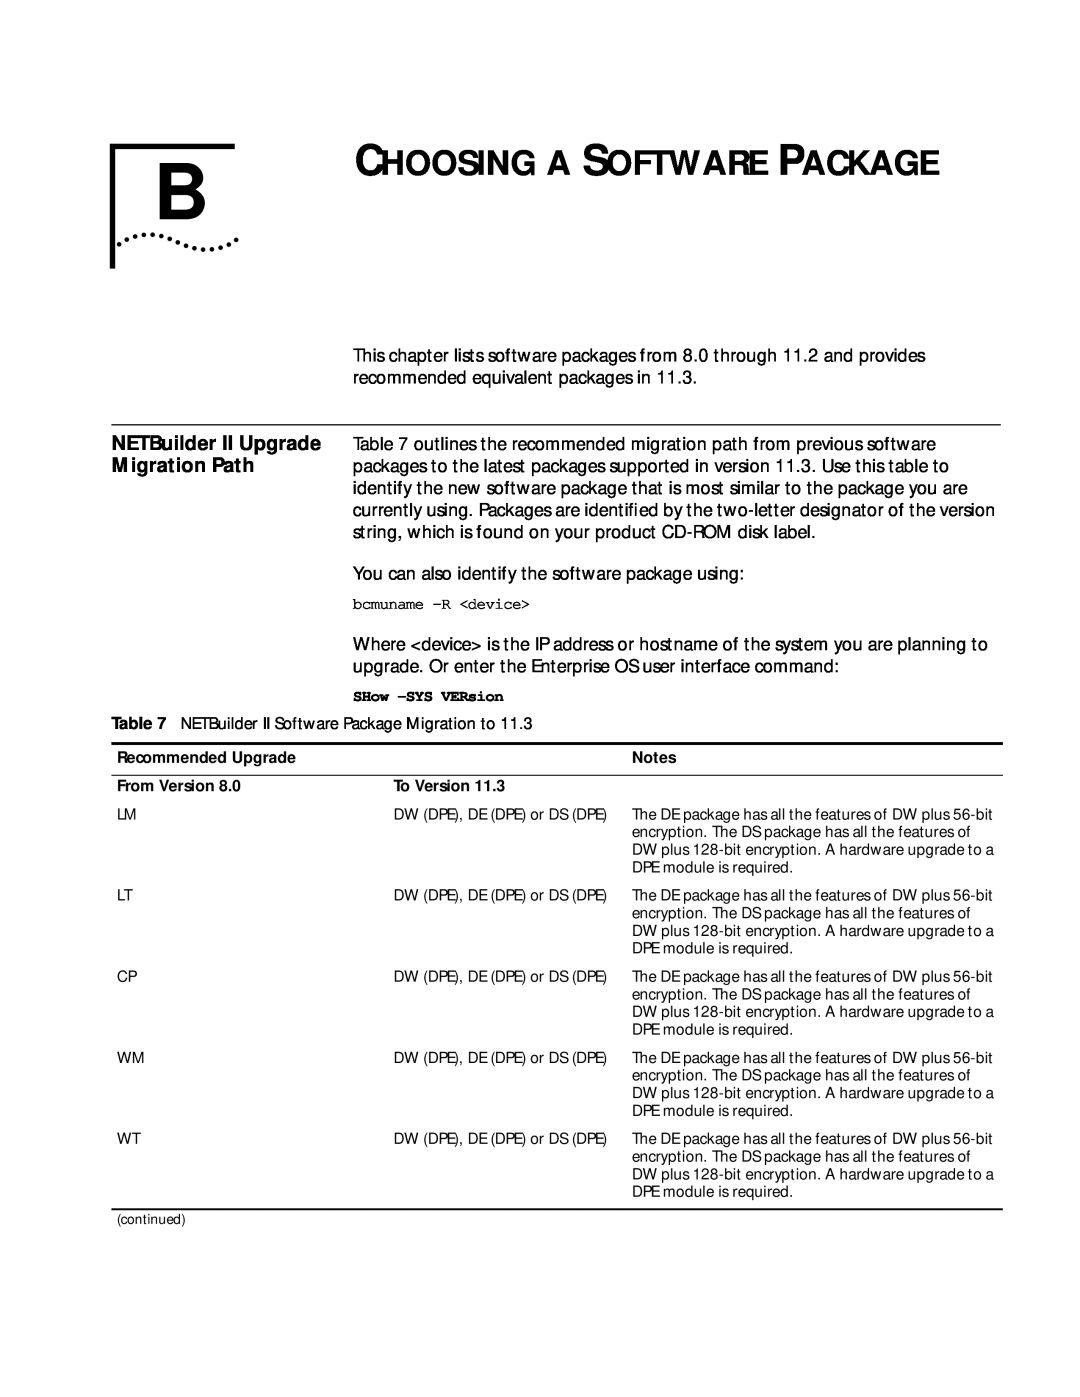 3Com ENTERPRISE OS 11.3 manual Choosing A Software Package, NETBuilder II Upgrade, Migration Path 